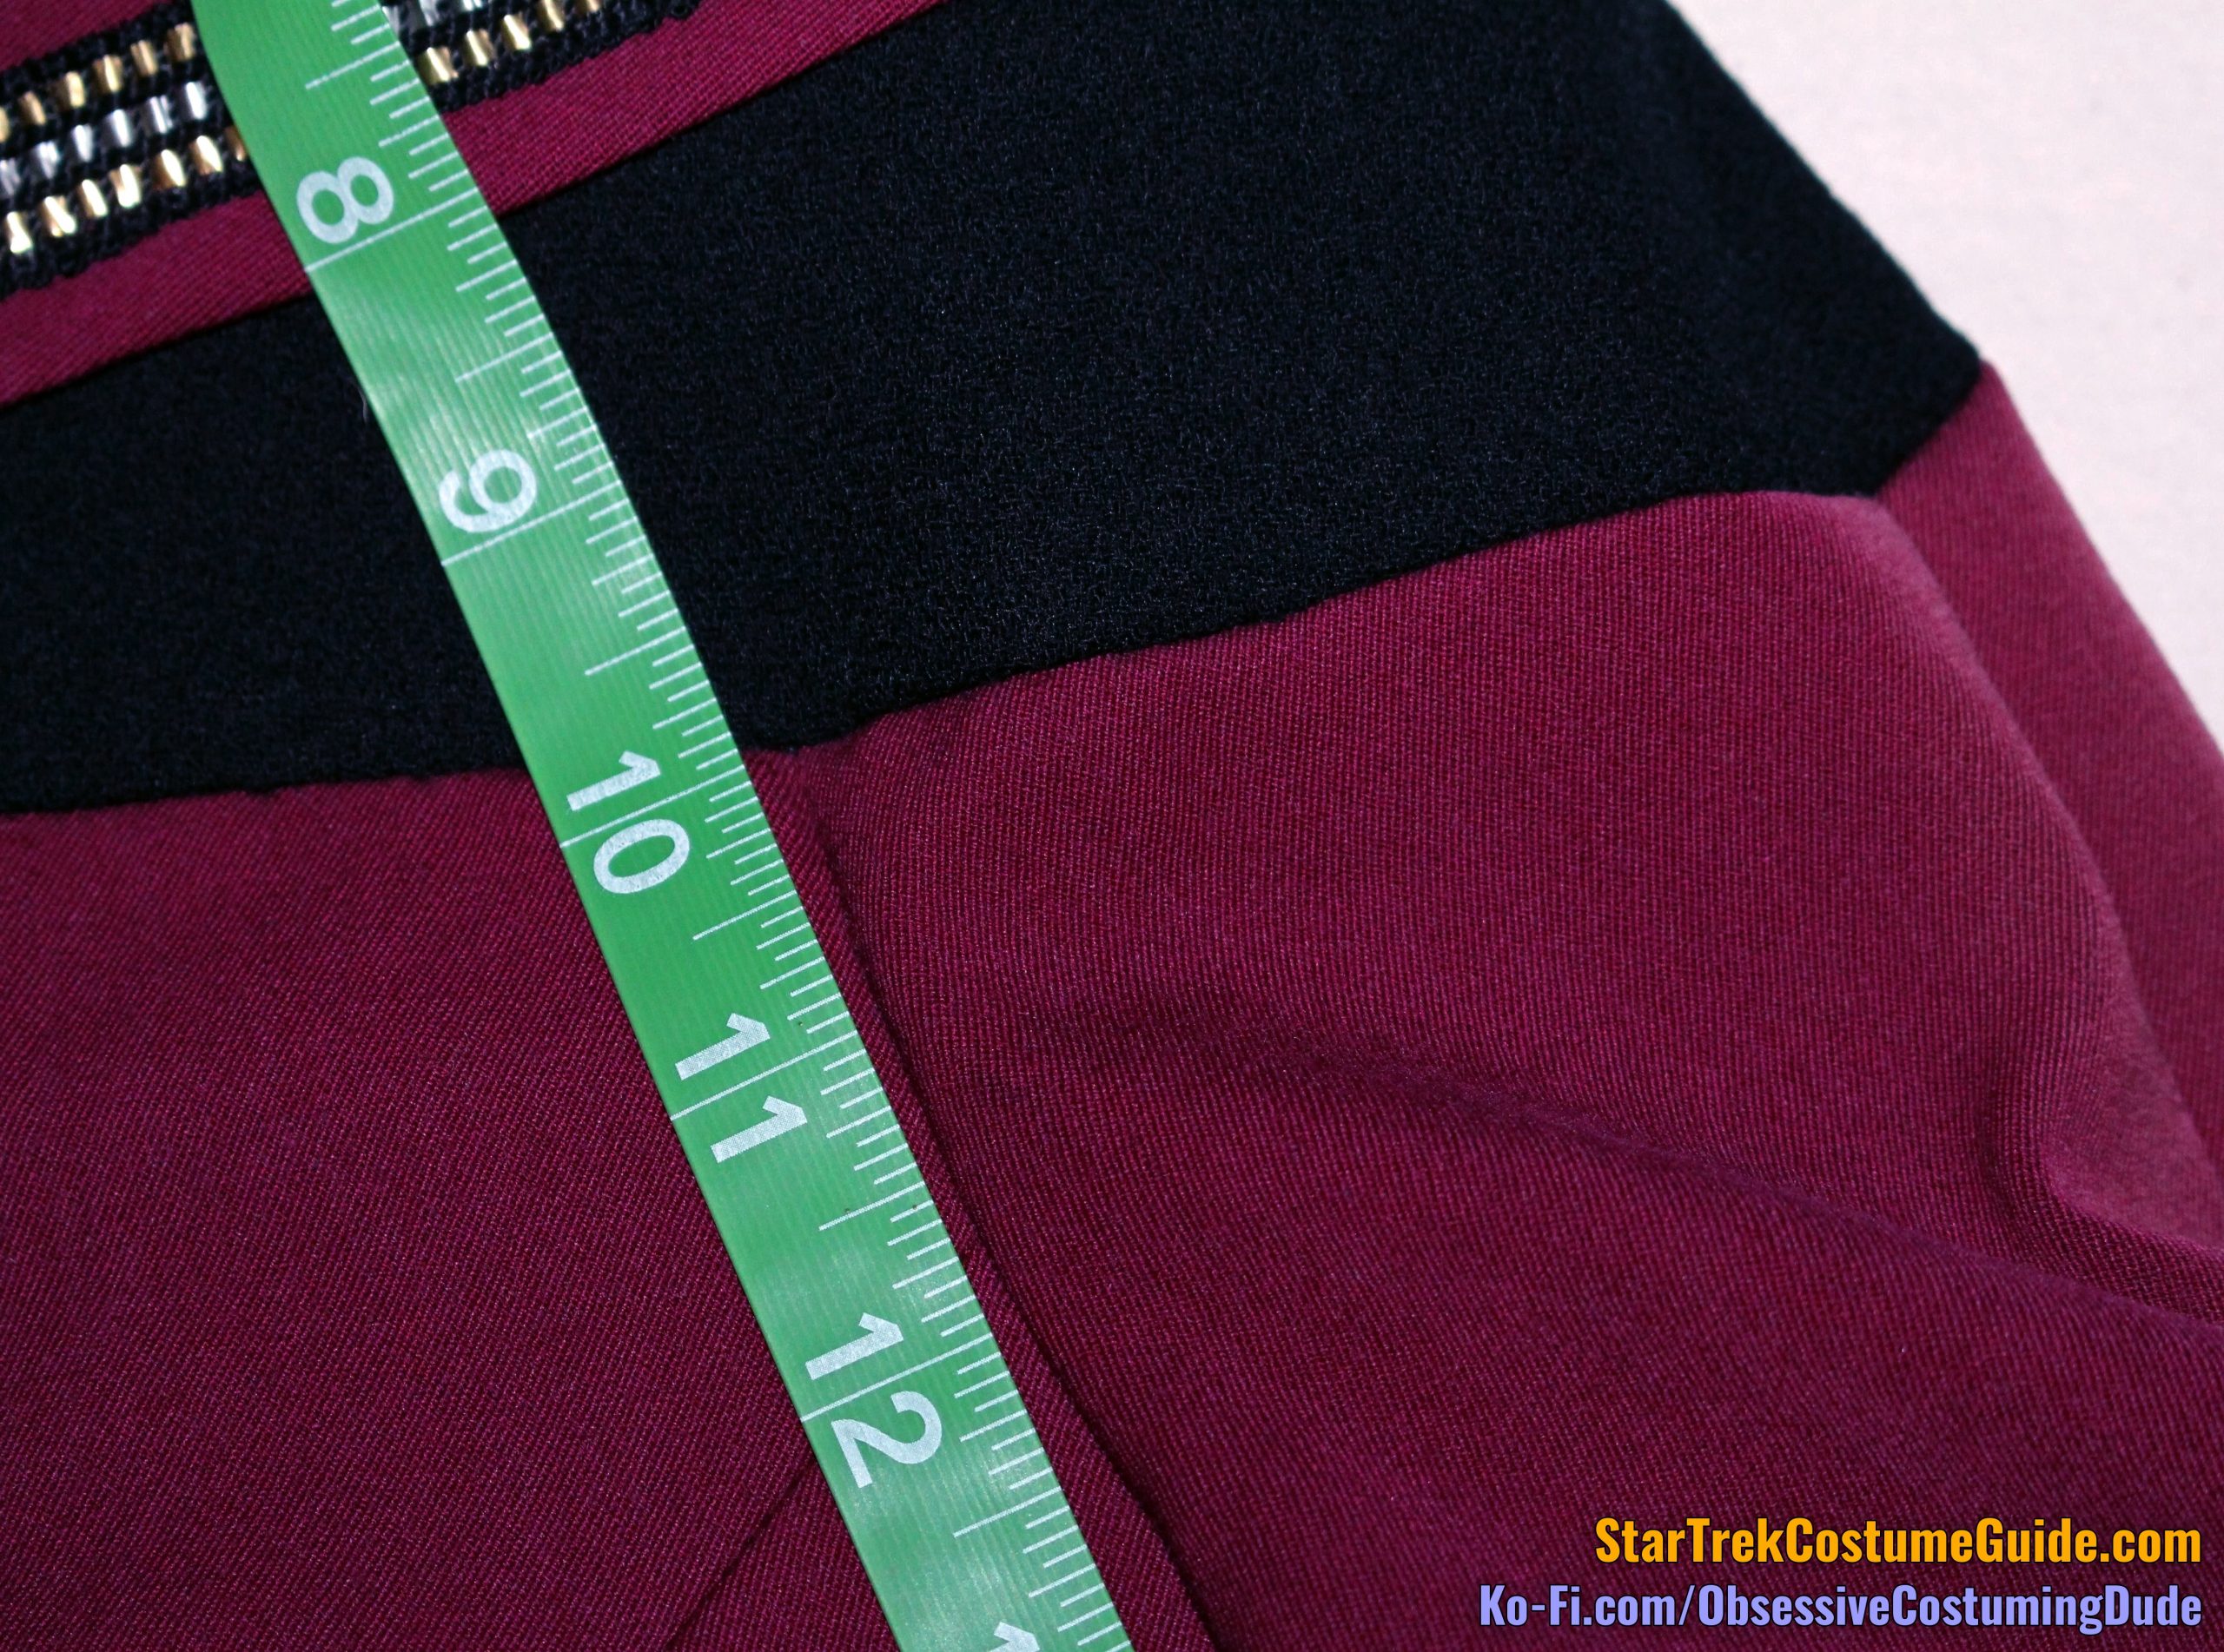 TNG admiral uniform (season 2) examination - Star Trek Costume Guide